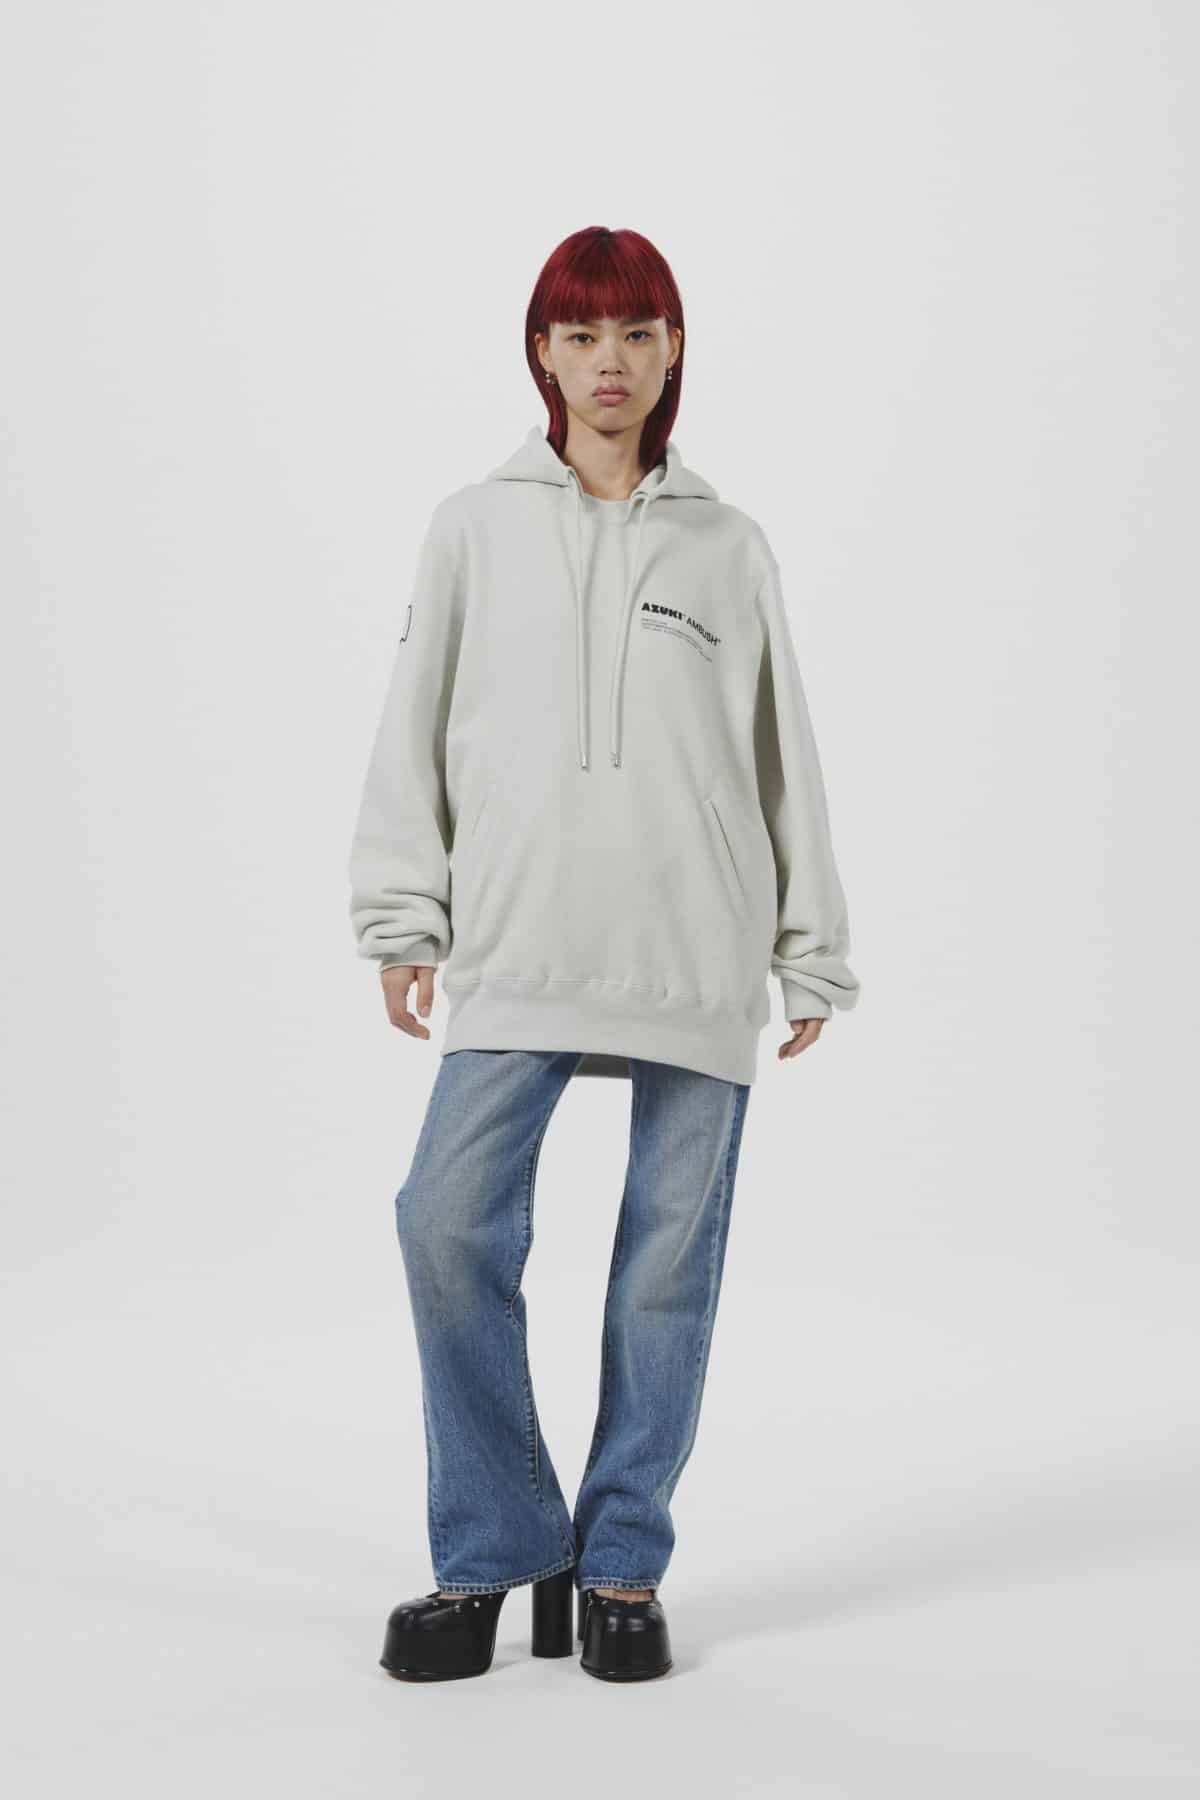 Azuki NFT Collection Announces Streetwear Collab with AMBUSH